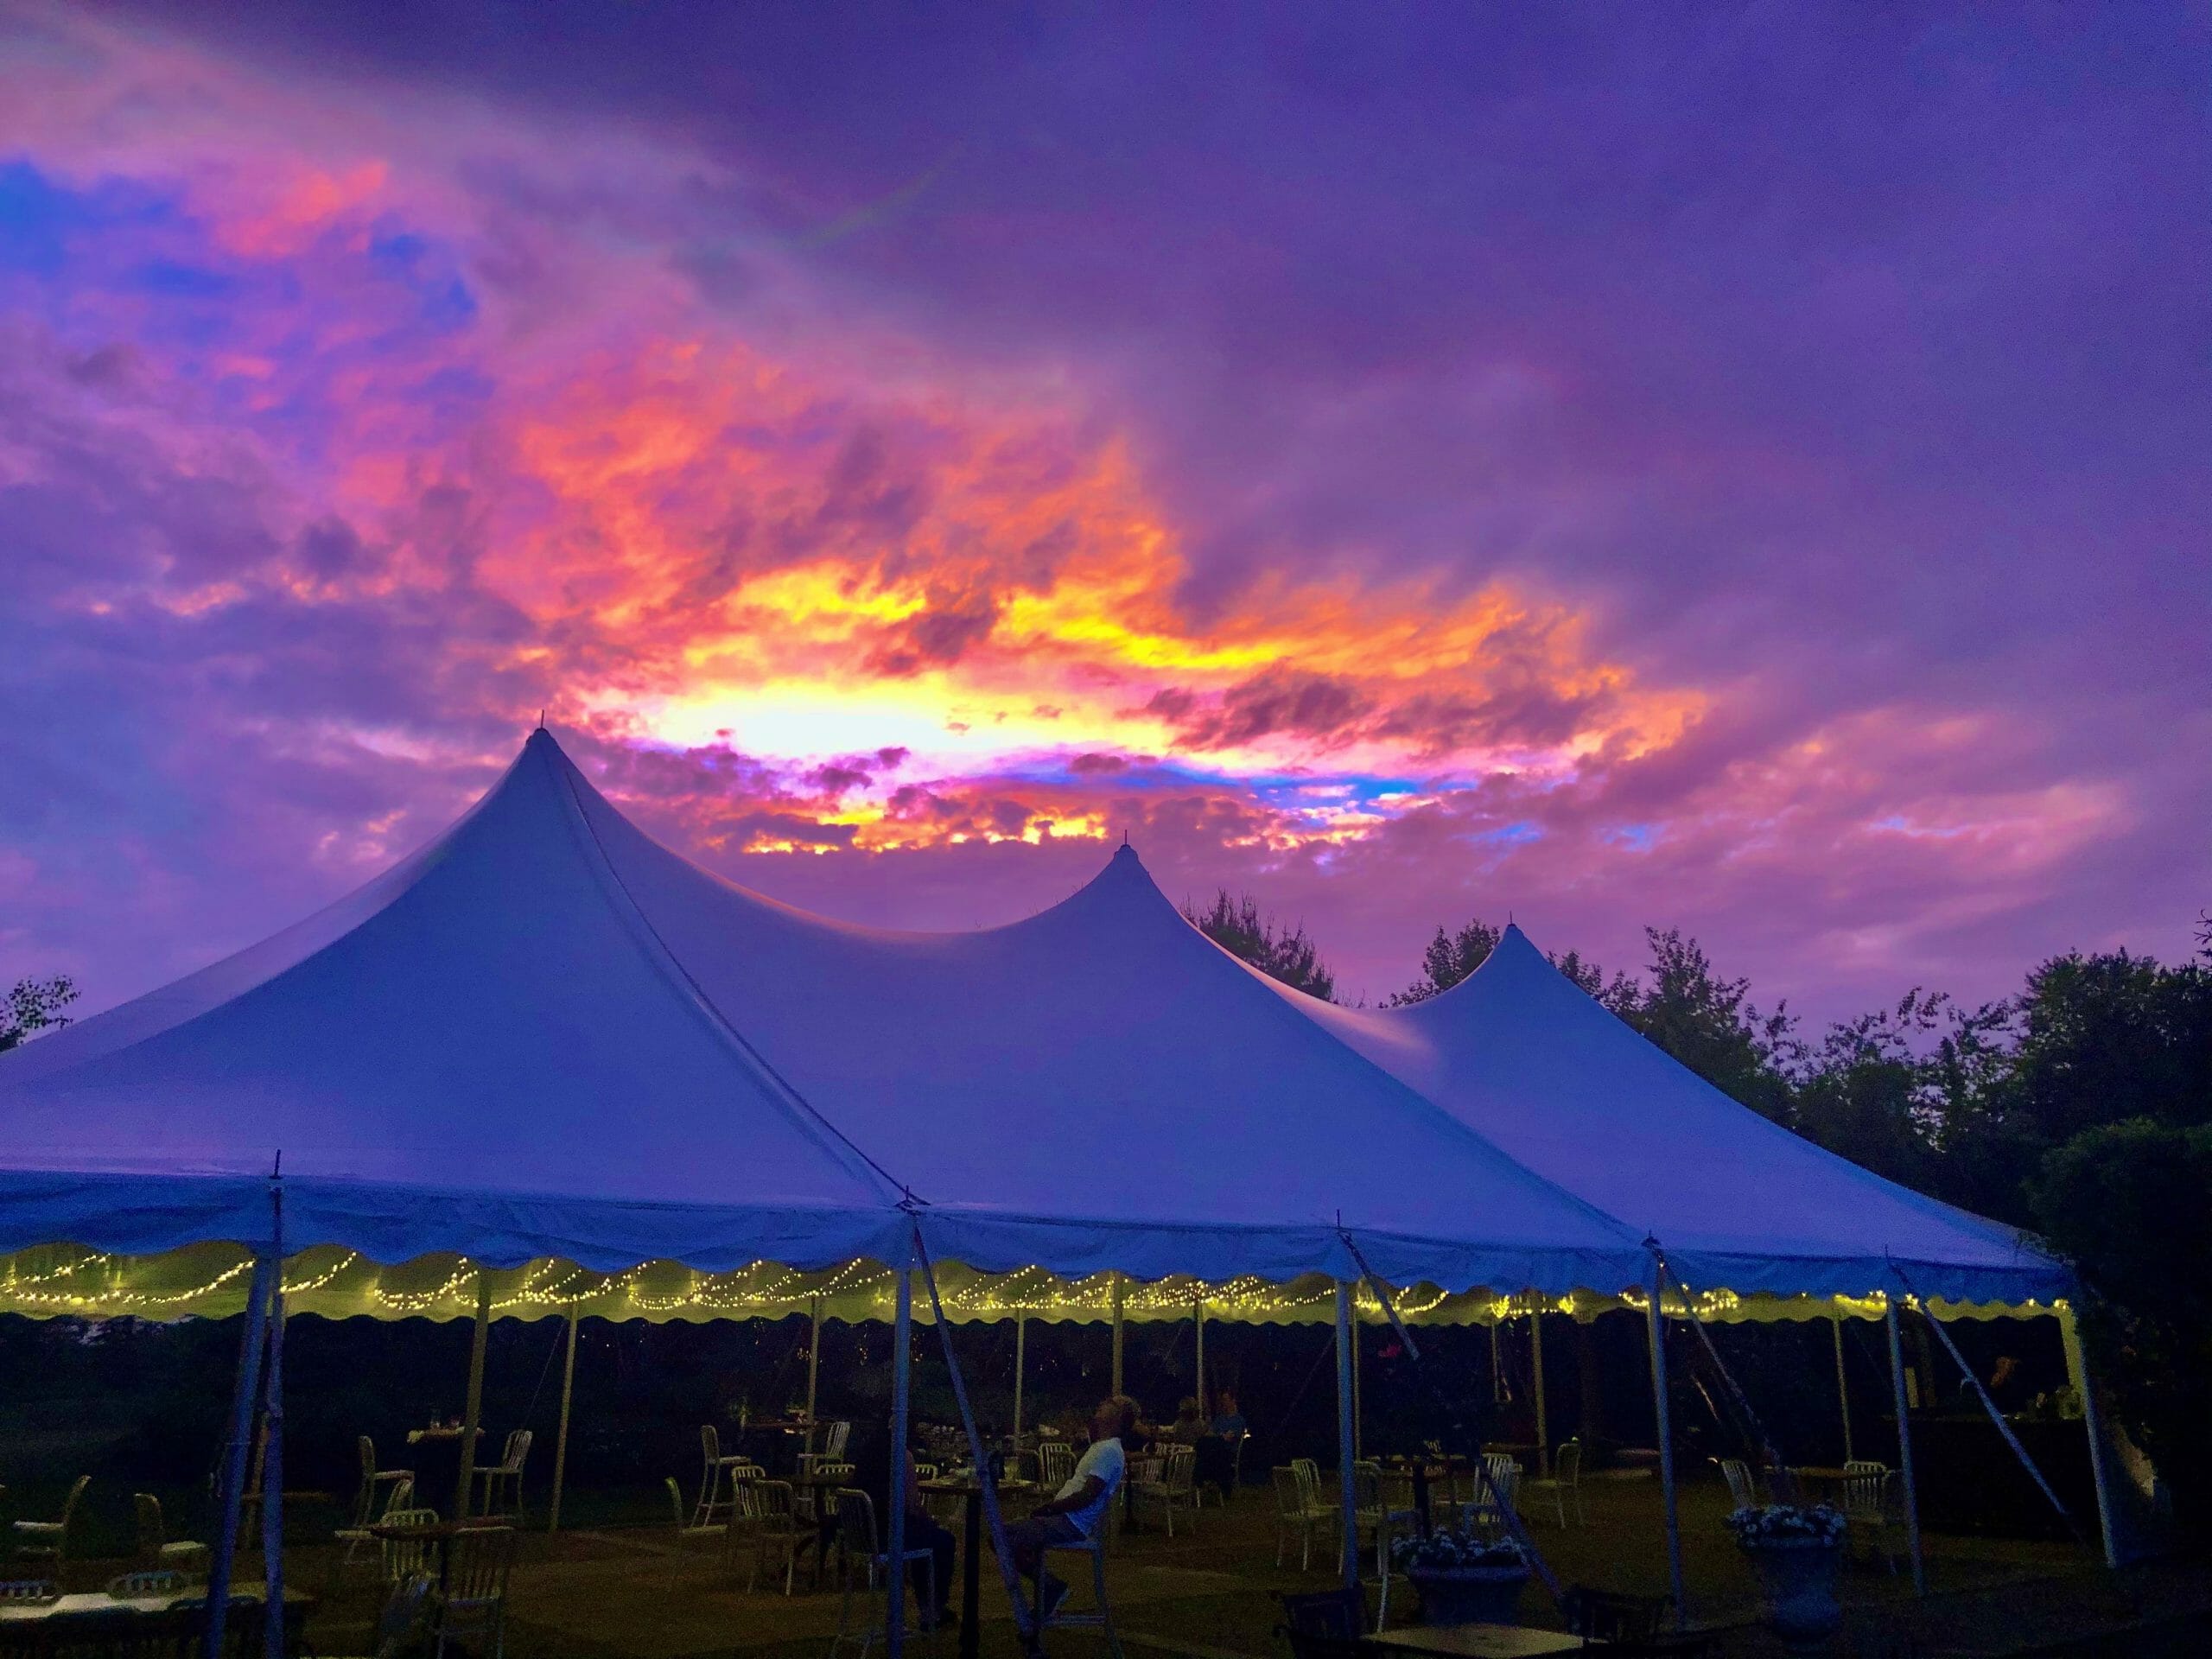 Sunset Tent